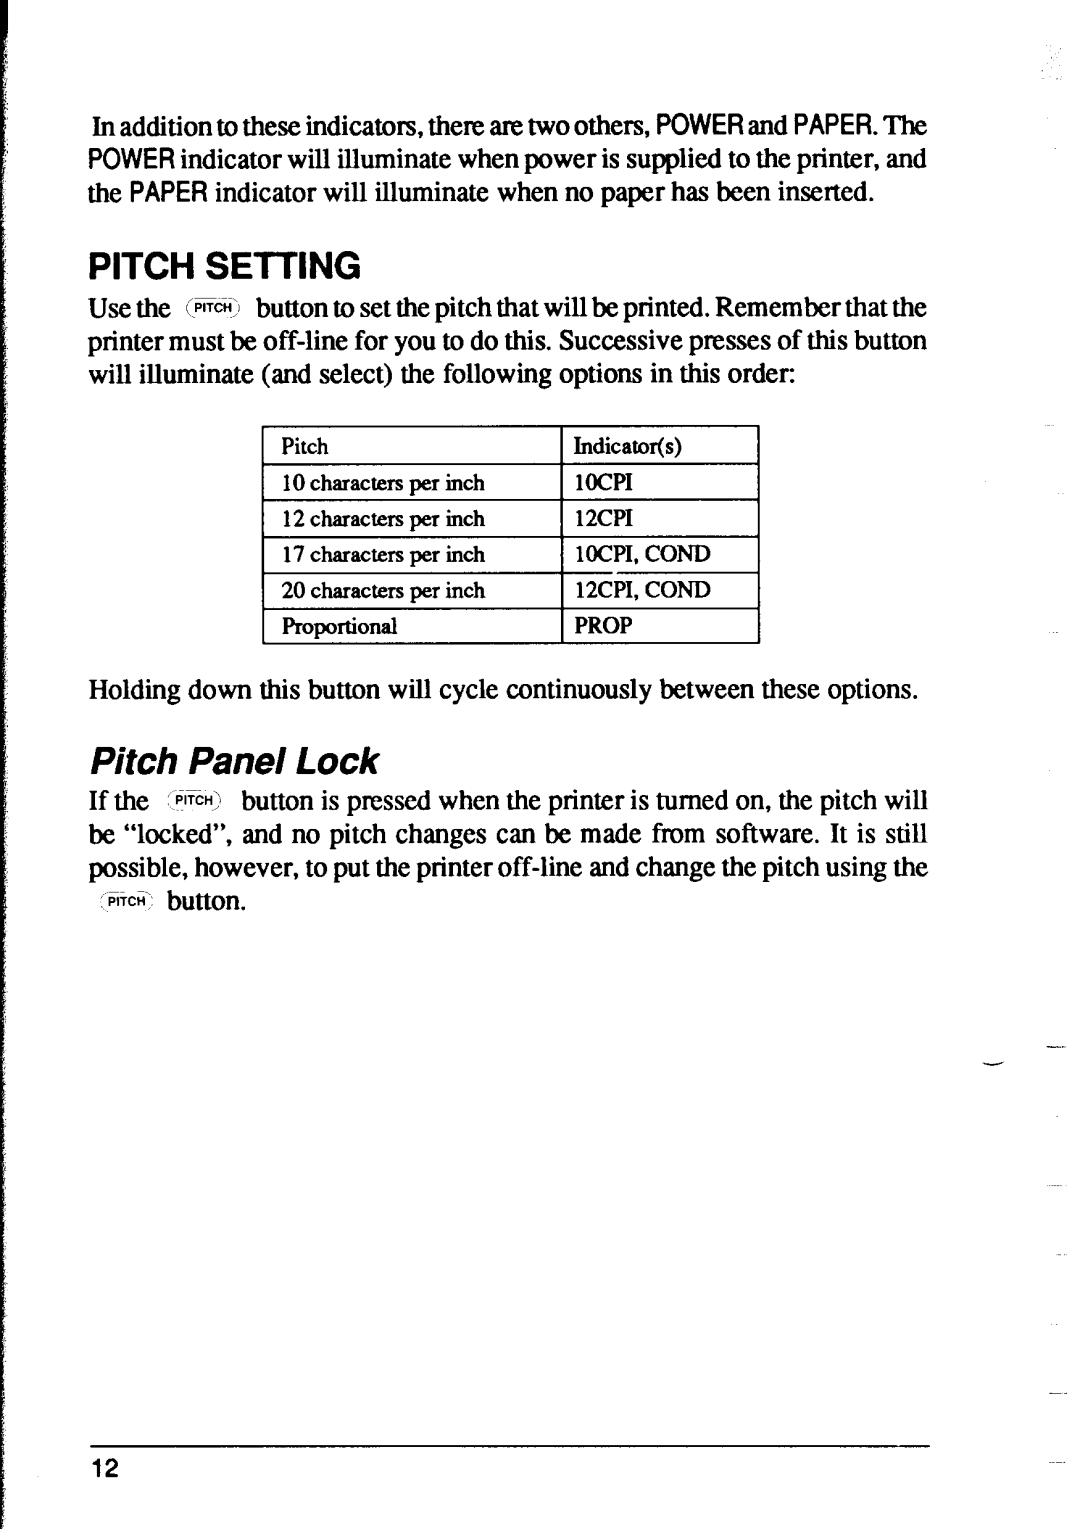 Star Micronics XR-1500, XR-1000 user manual Pitch Setting, Pitch Pane/ Lock 